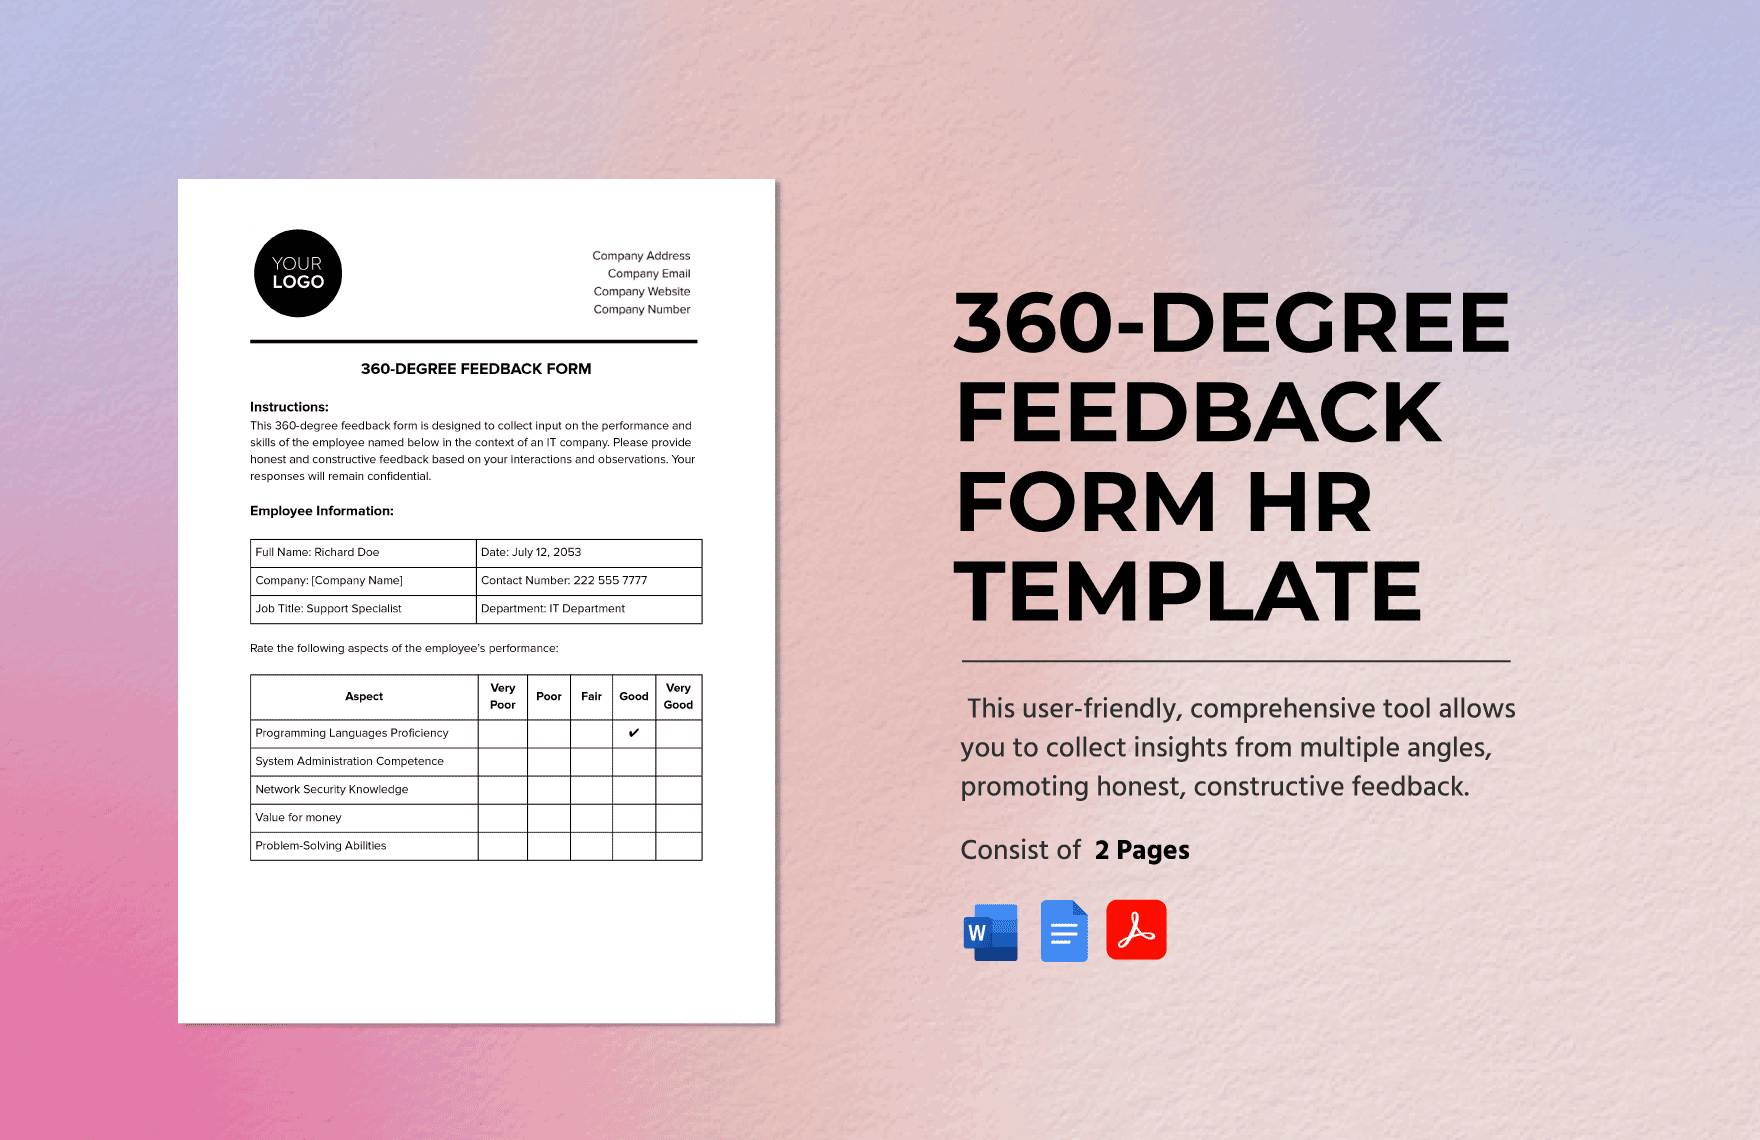 360-Degree Feedback Form HR Template in Word, Google Docs, PDF